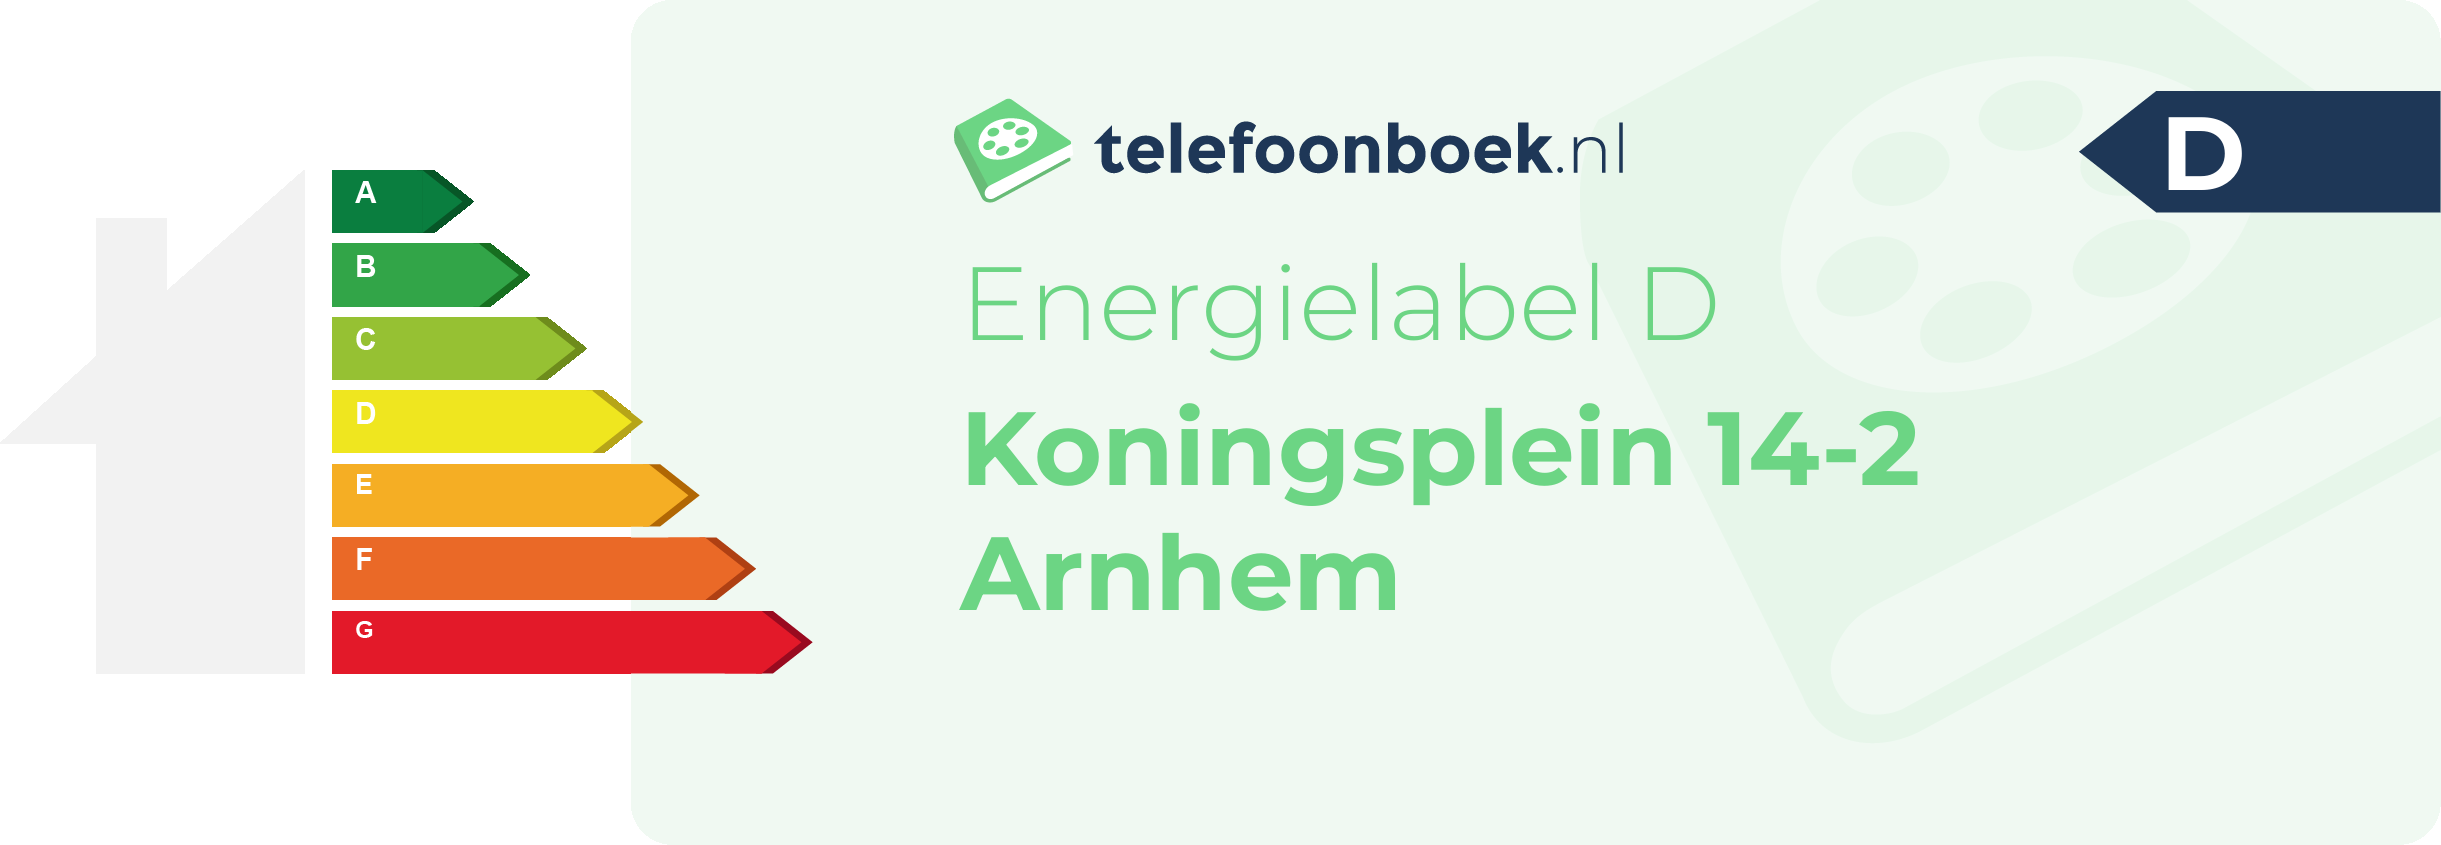 Energielabel Koningsplein 14-2 Arnhem